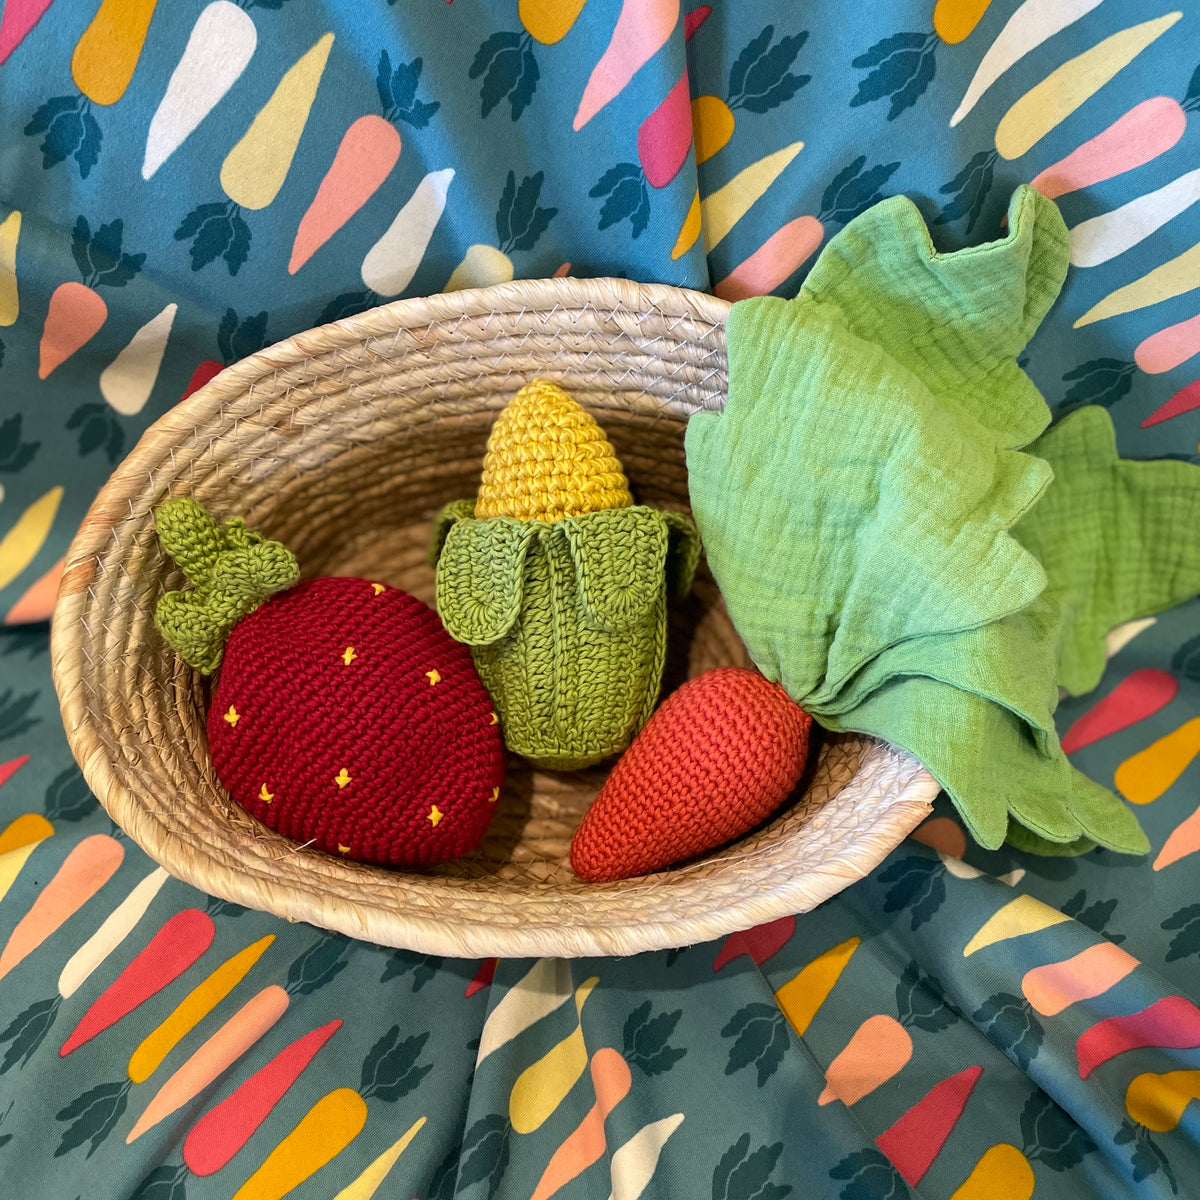 MyuM - Corn Crocheted Baby Rattle, Strawberry Reversible Toy & Comforter Carrot - My Little Korner